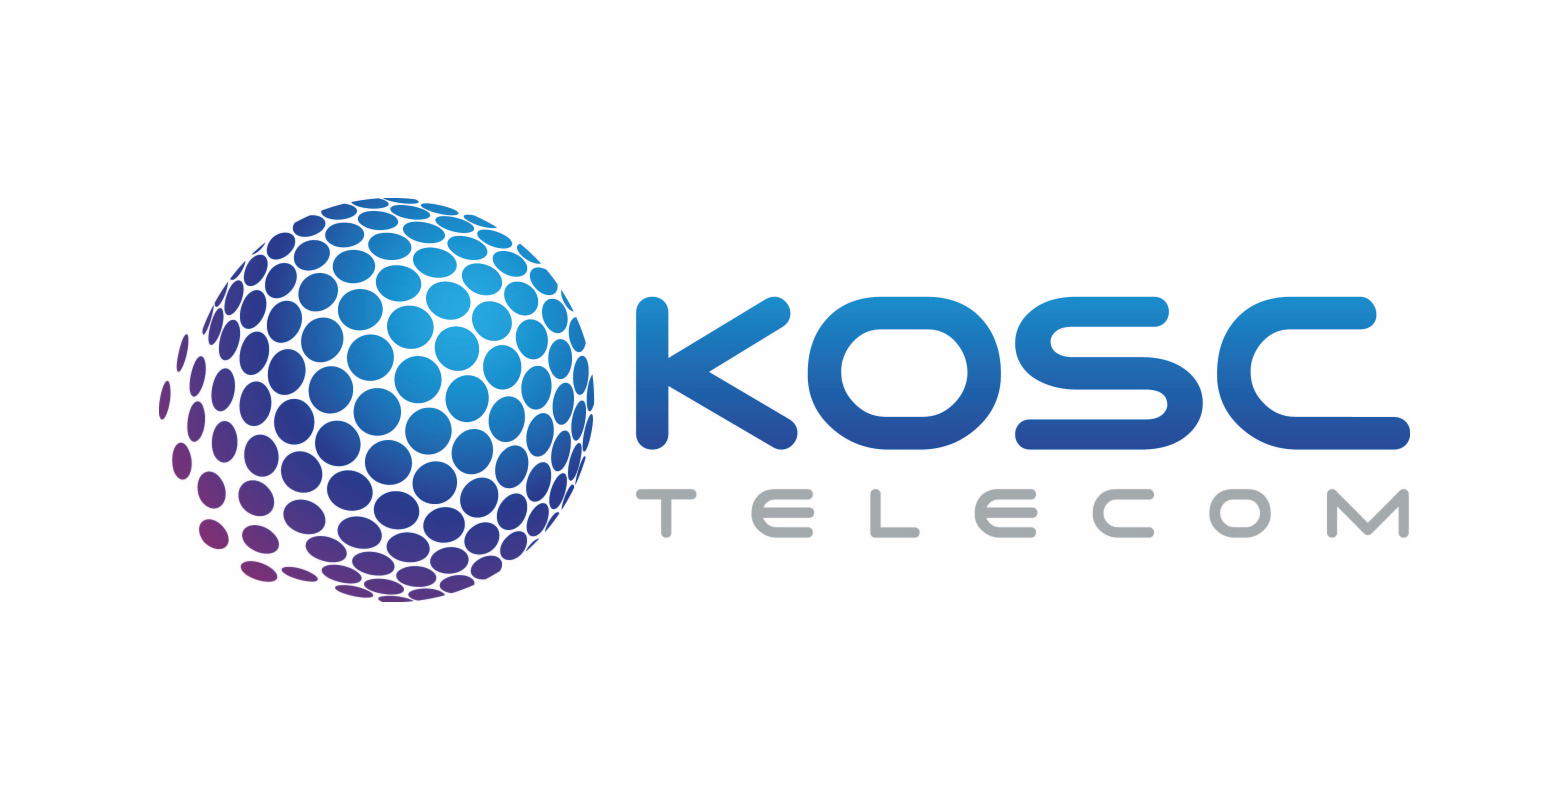 Kosc-Telecom